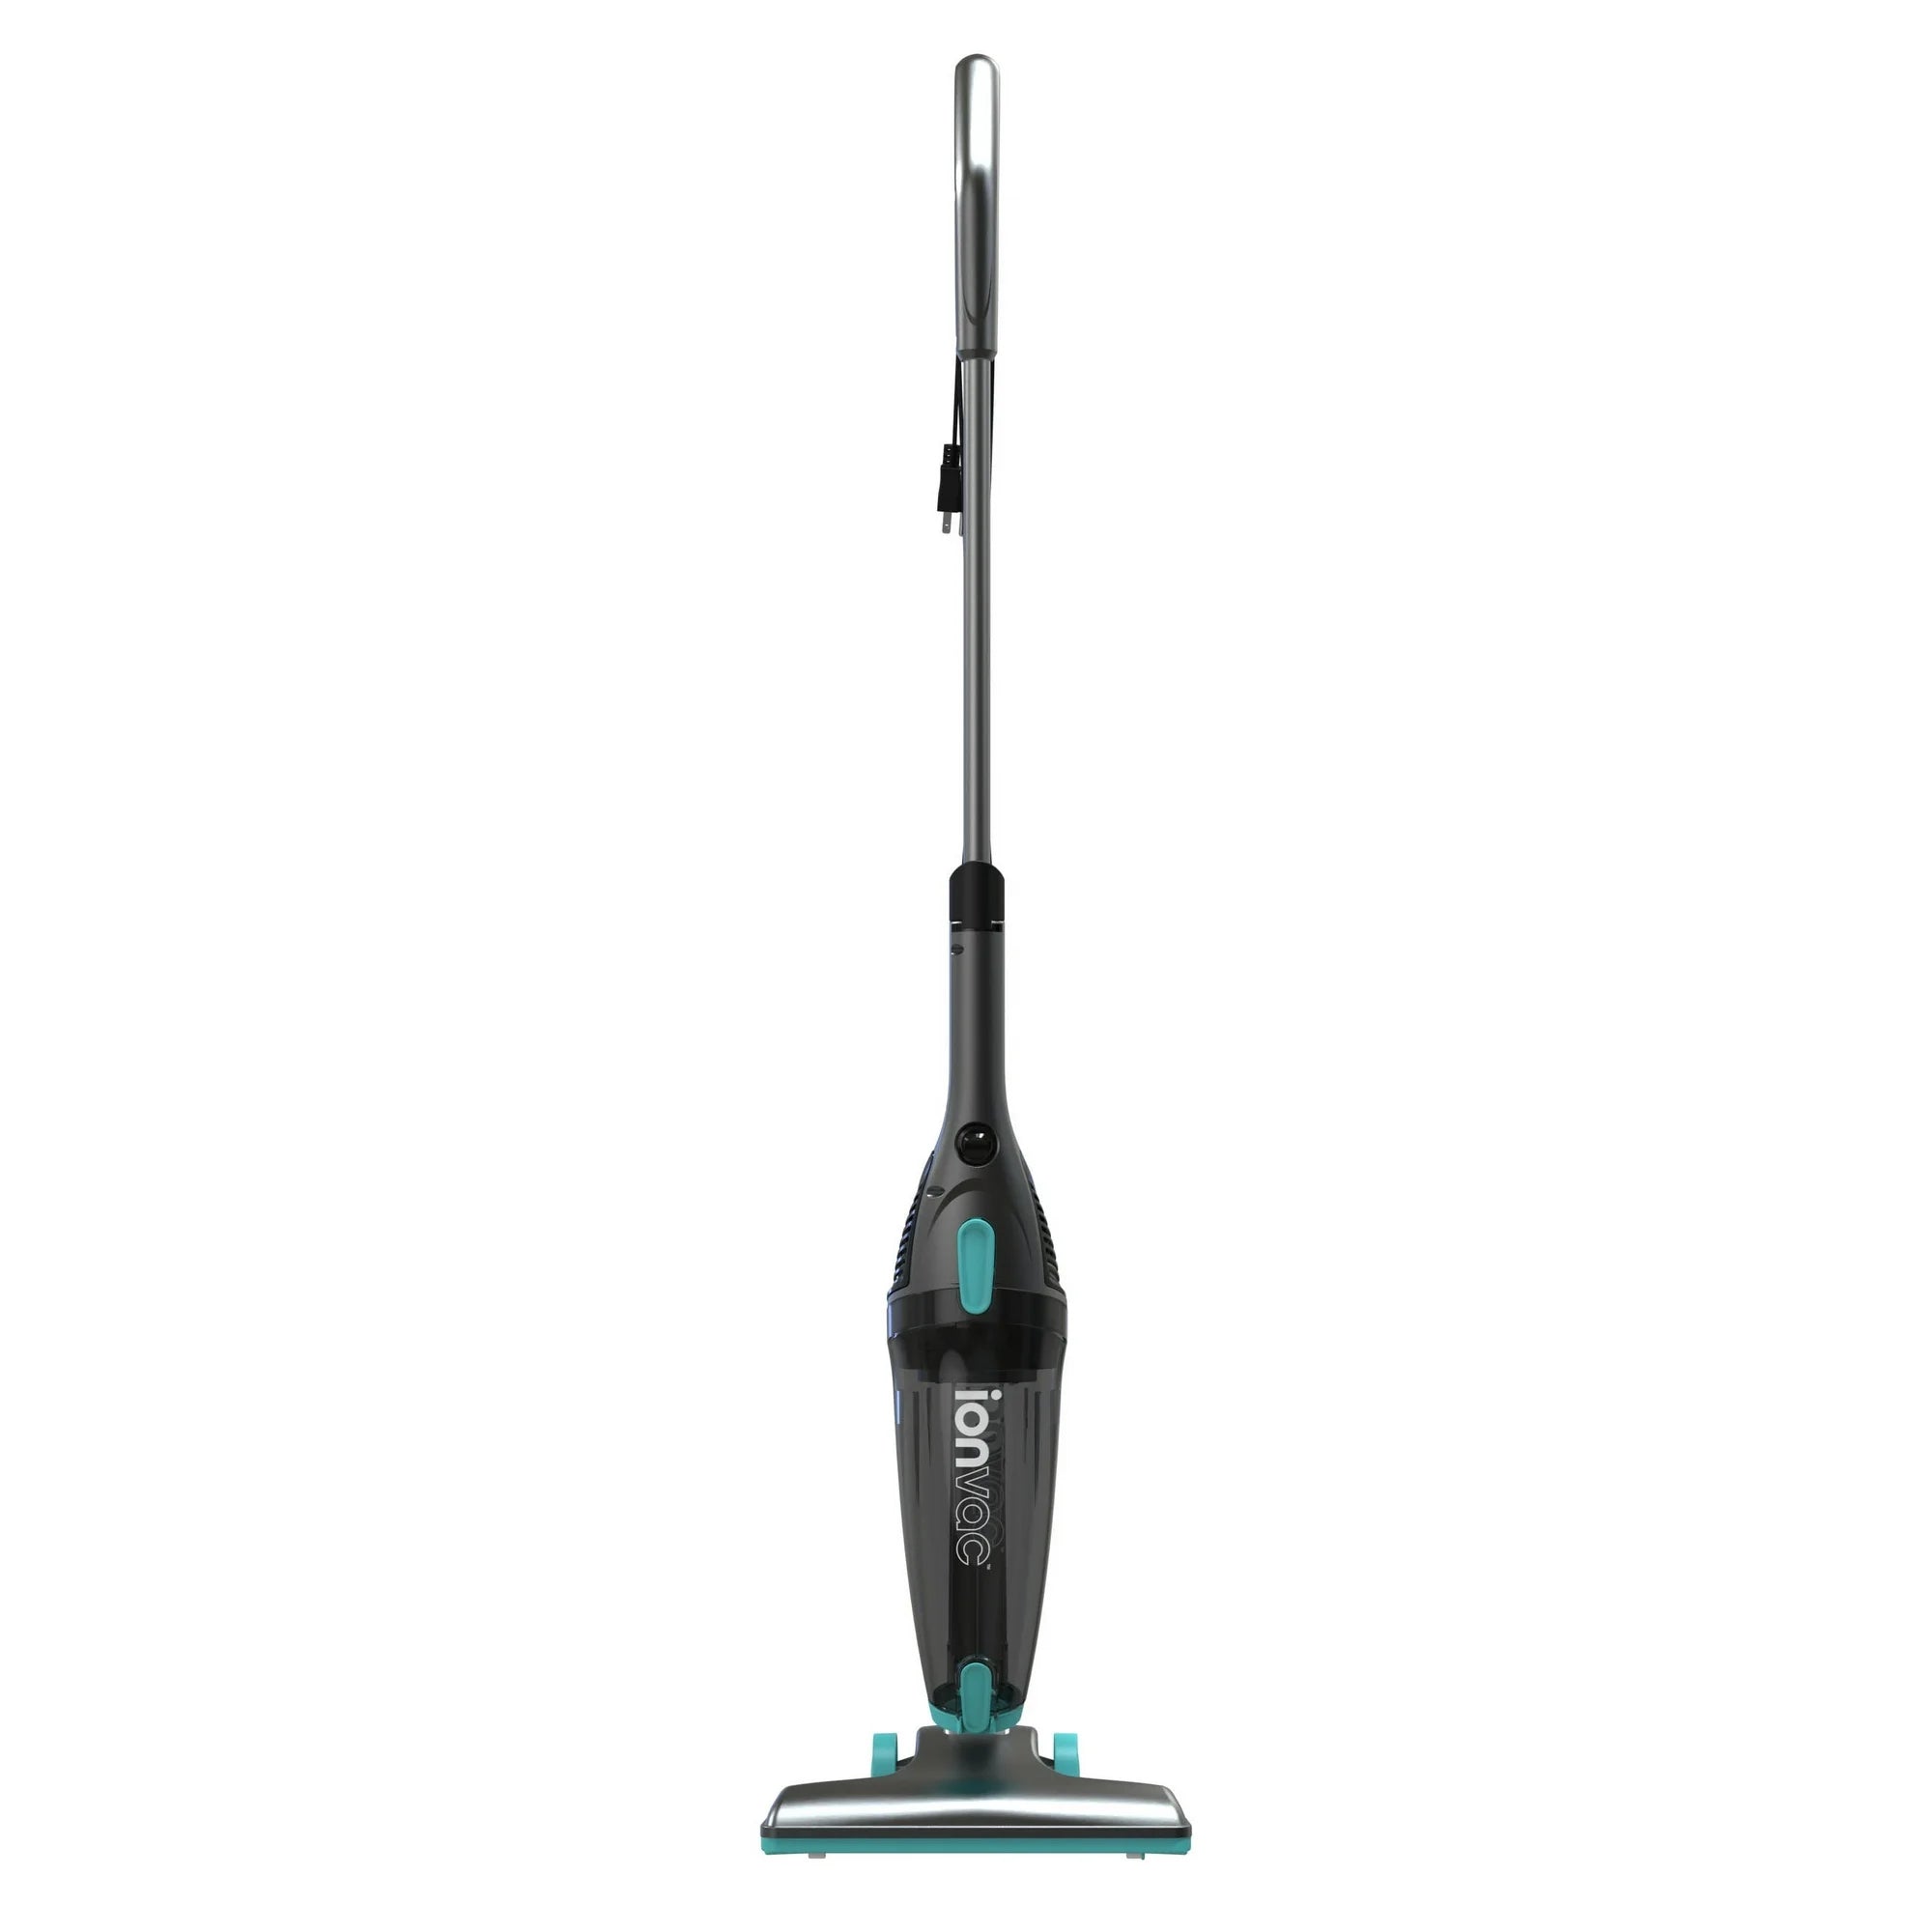 3-in-1 Corded Upright/Handheld Vacuum Cleaner